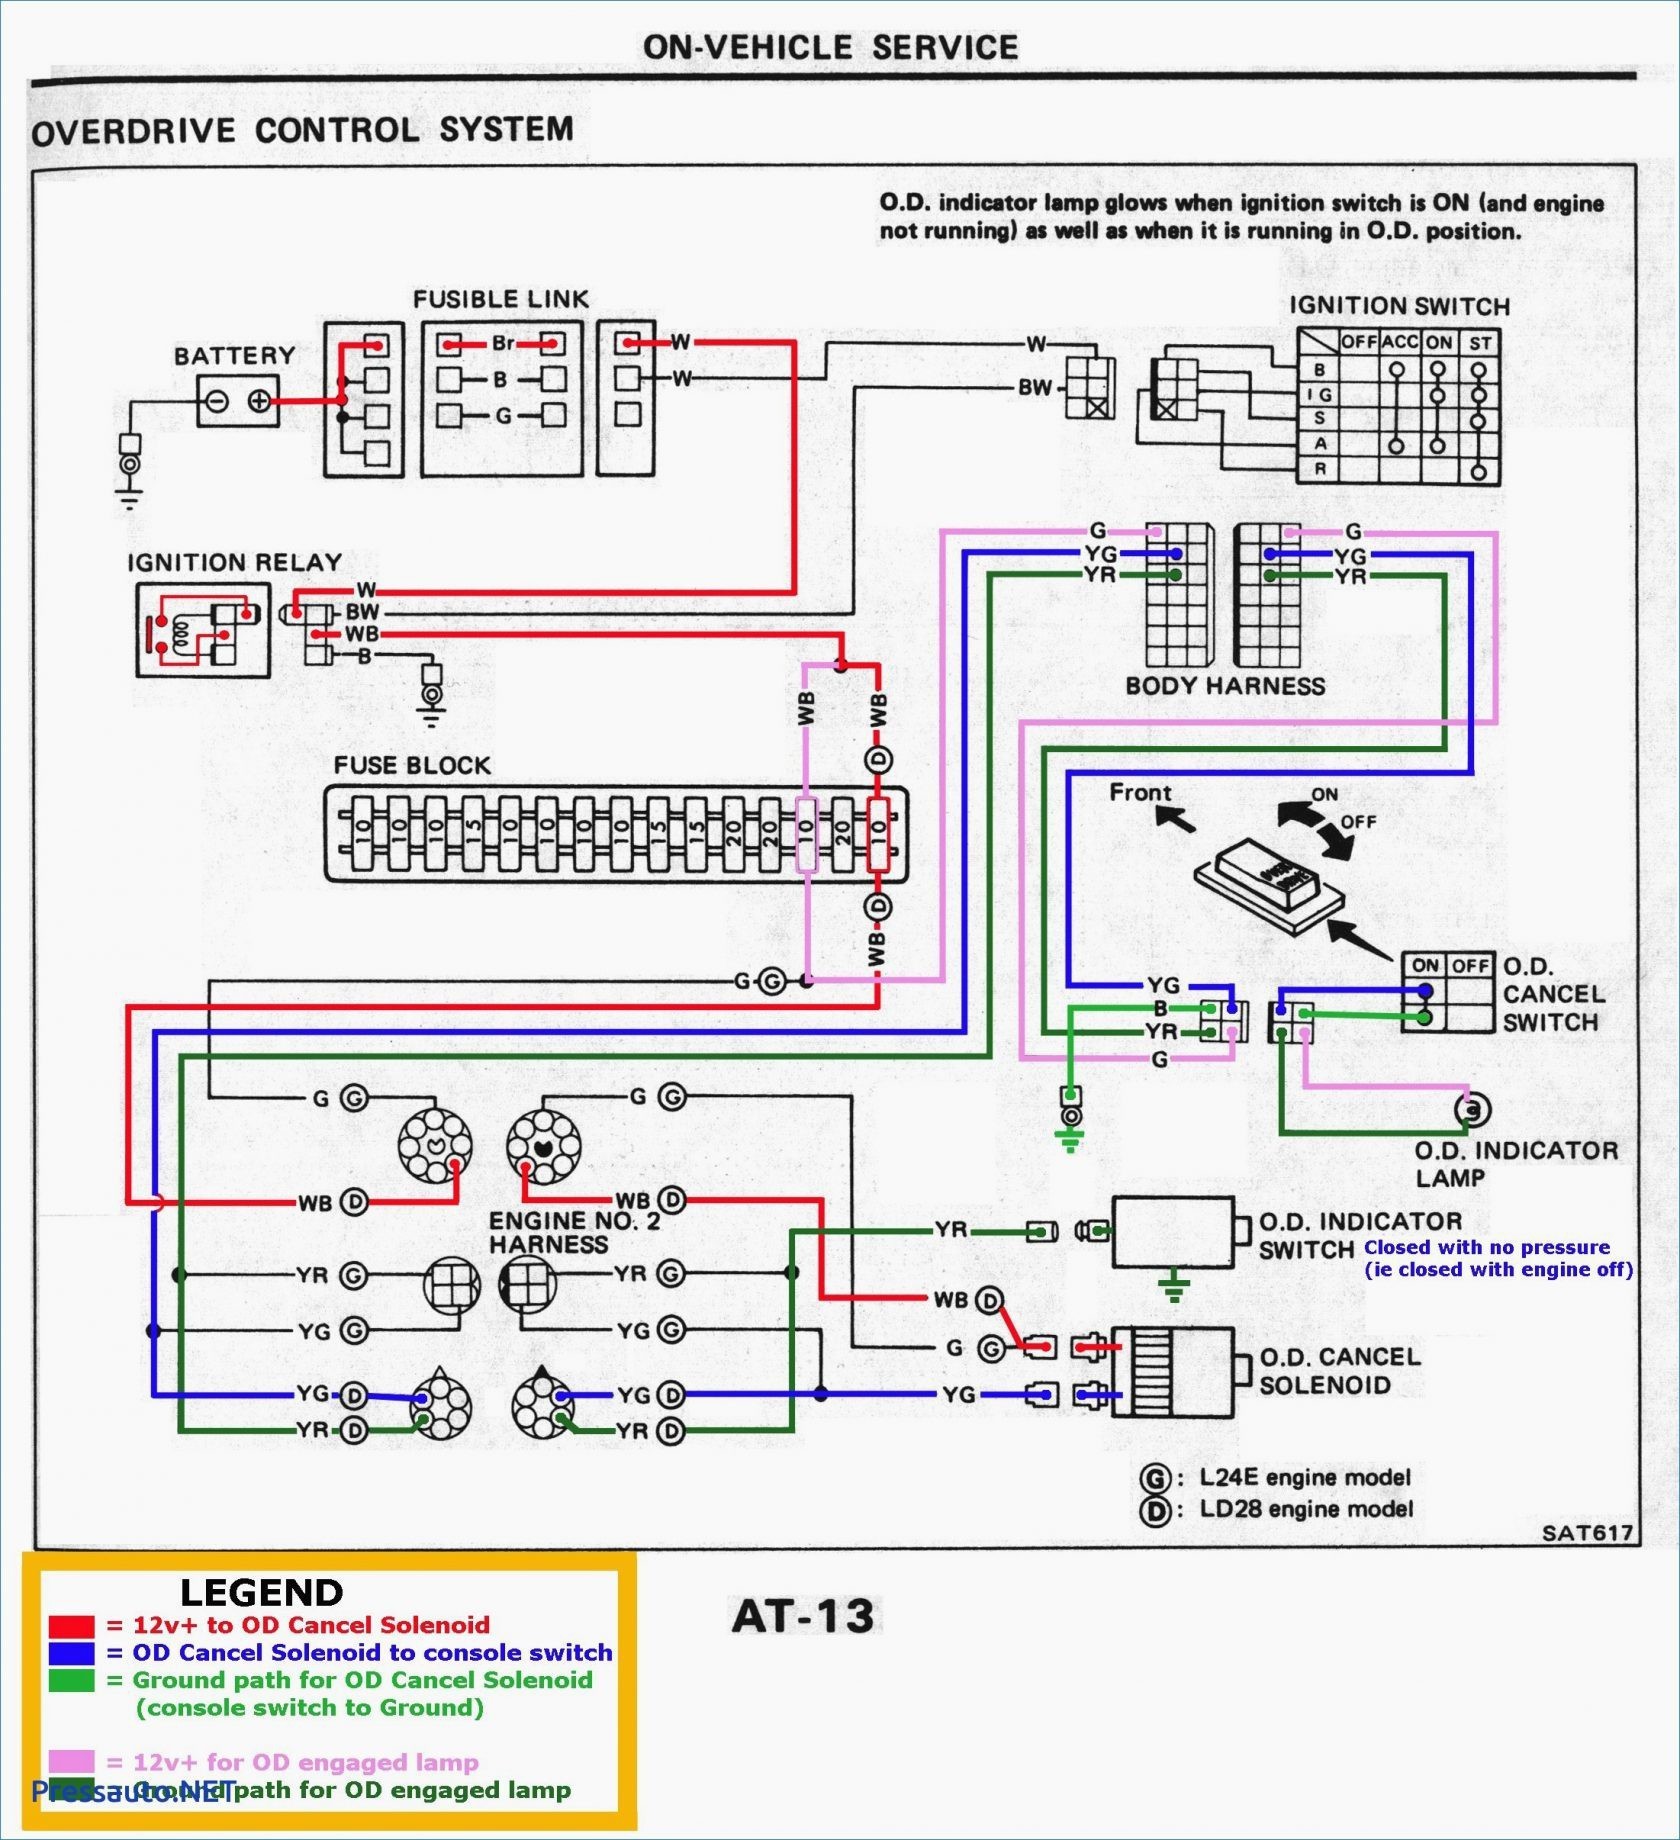 94 ford Ranger Engine Diagram Mercruiser 5 0 Wiring Diagram ford Wiring Diagram Pass Of 94 ford Ranger Engine Diagram